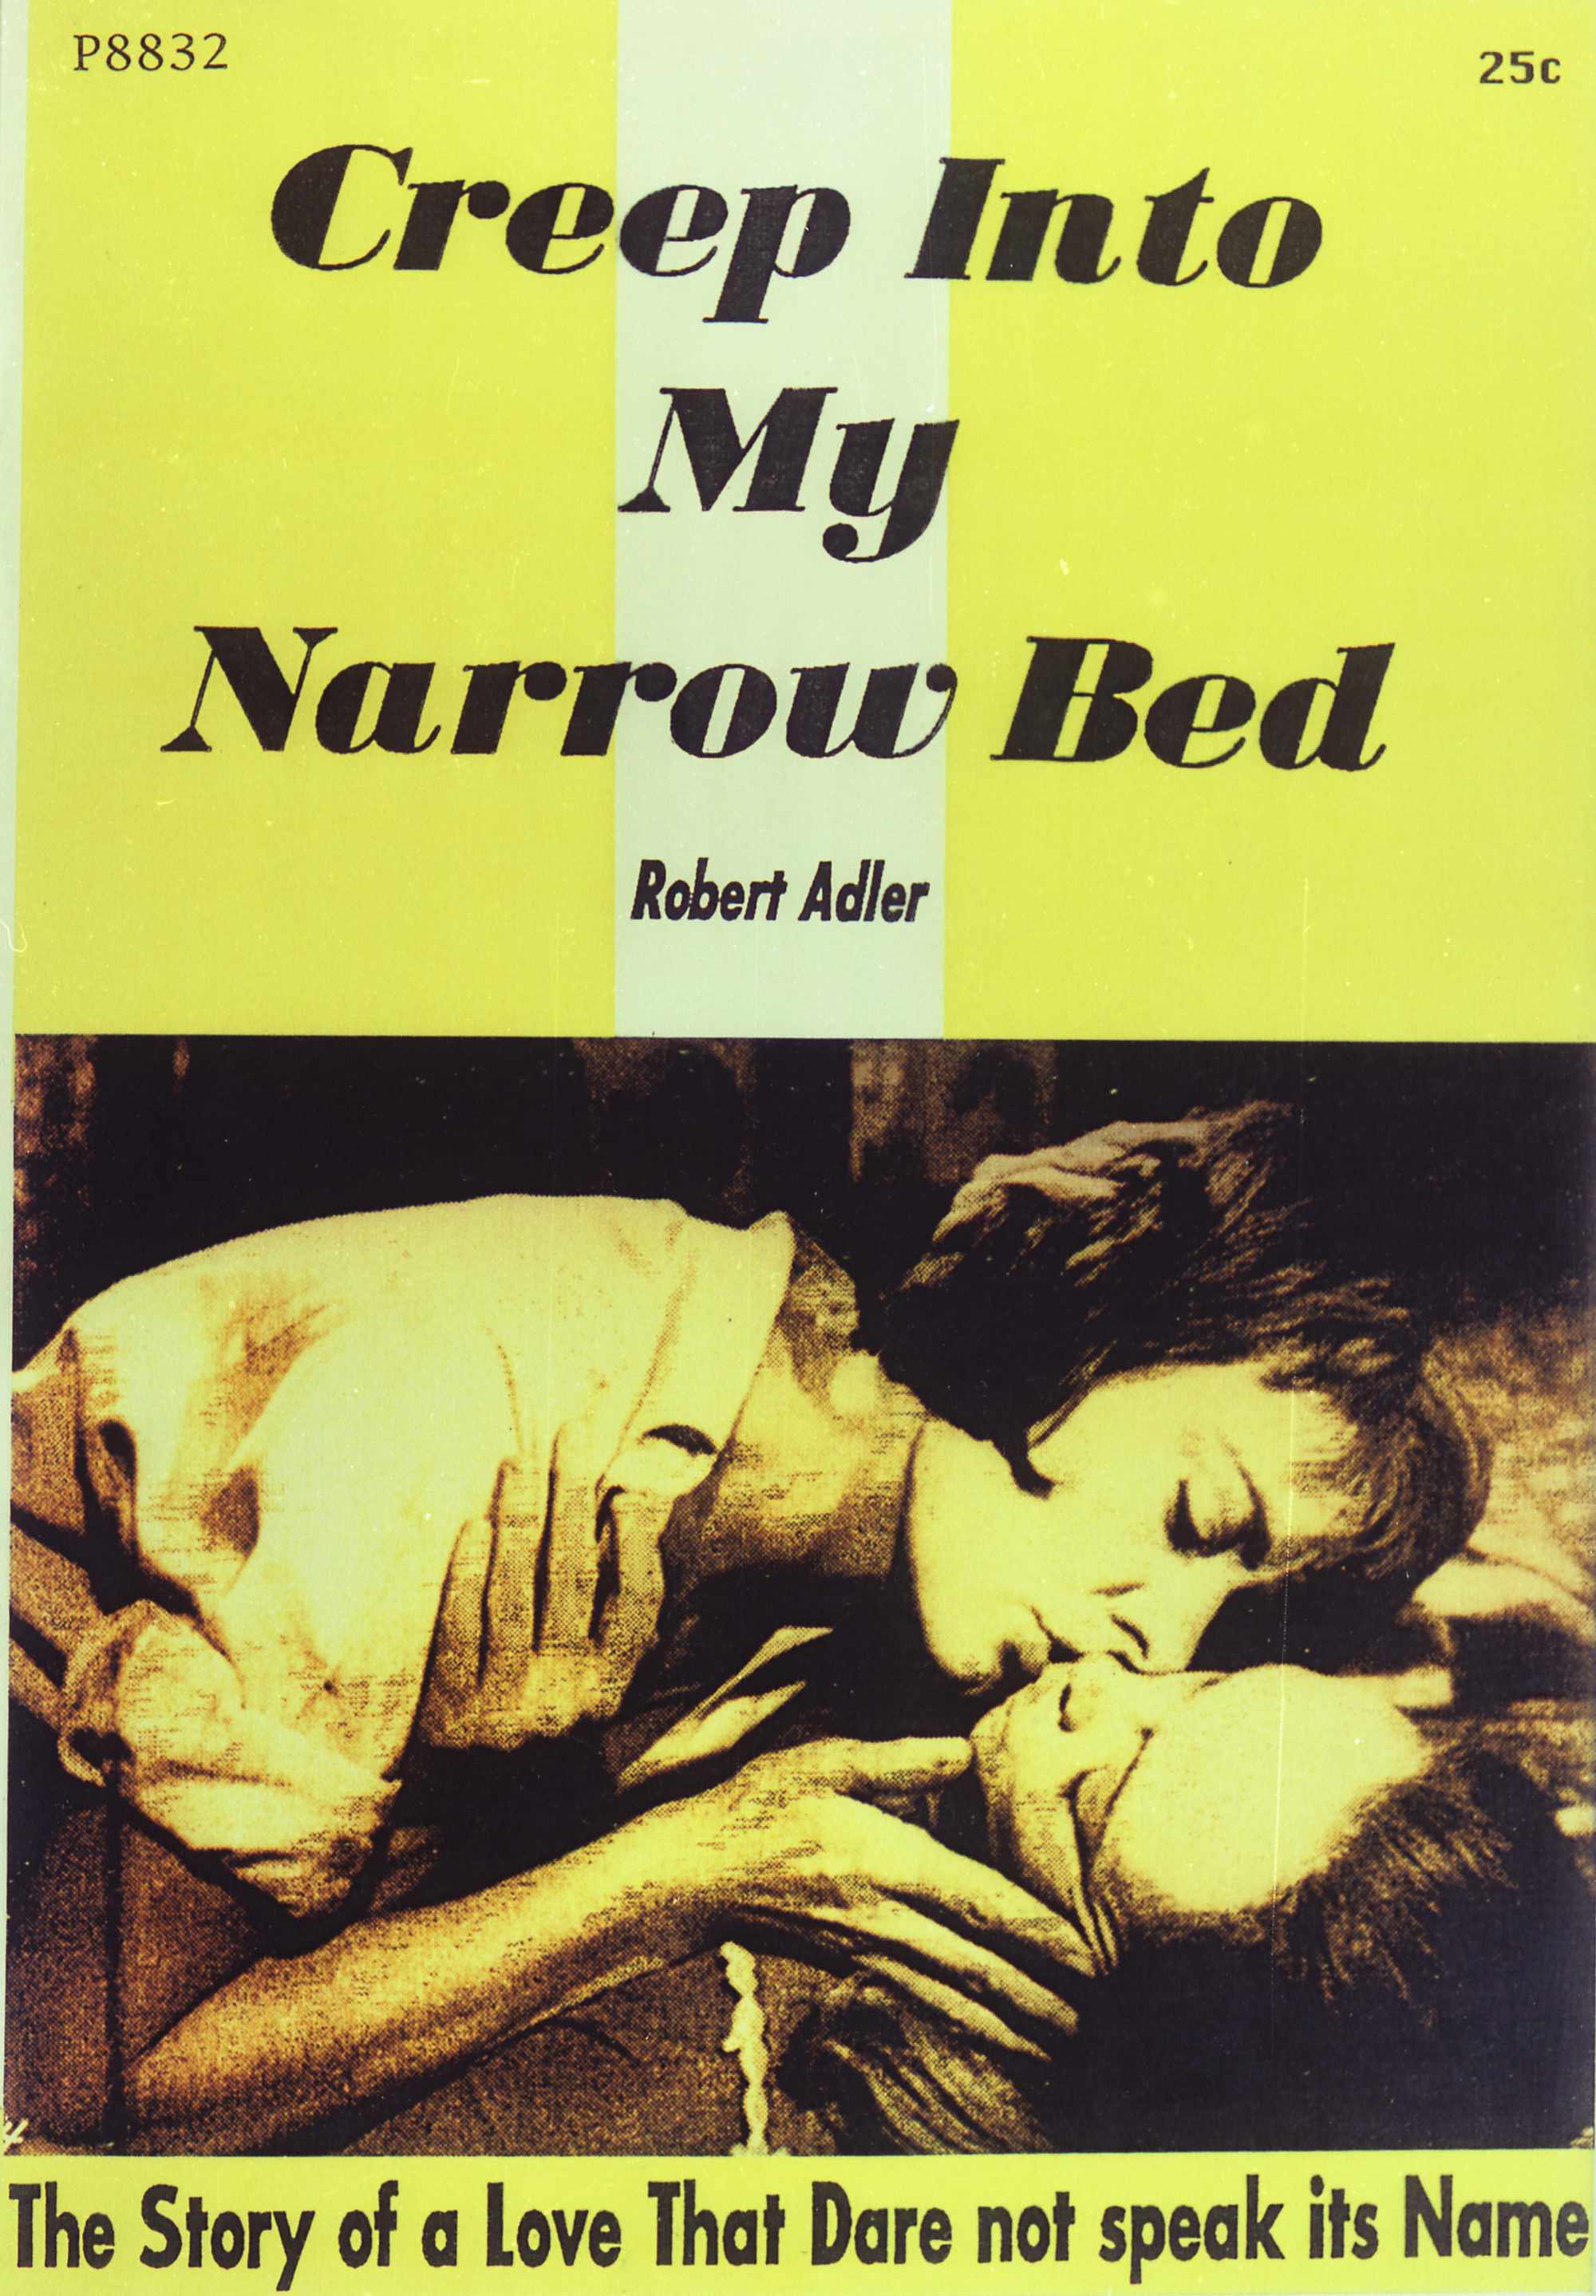 Creep Into My Narrow Bed - Type C Mural Print - 1000 x 1350mm